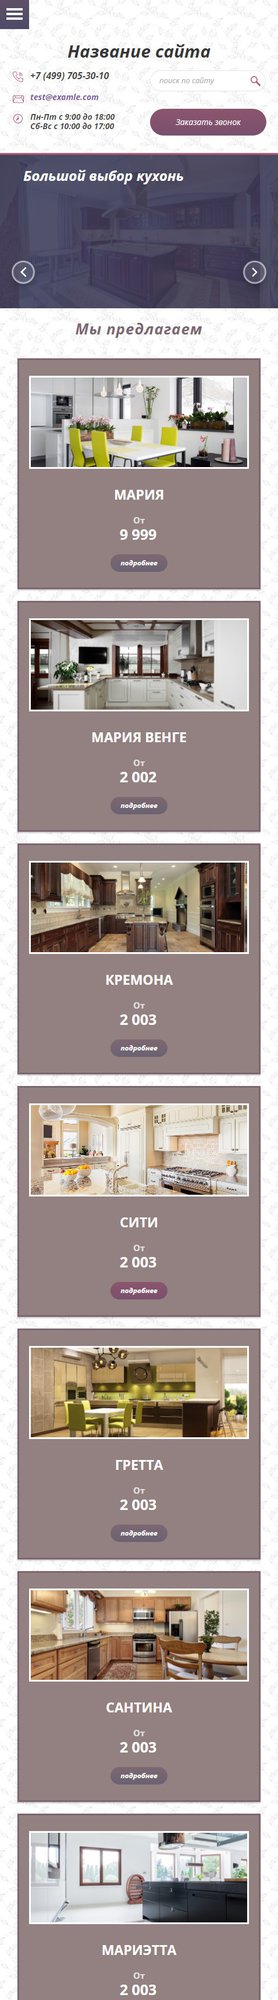 Готовый Сайт-Бизнес № 1686092 - Кухни на заказ (Мобильная версия)